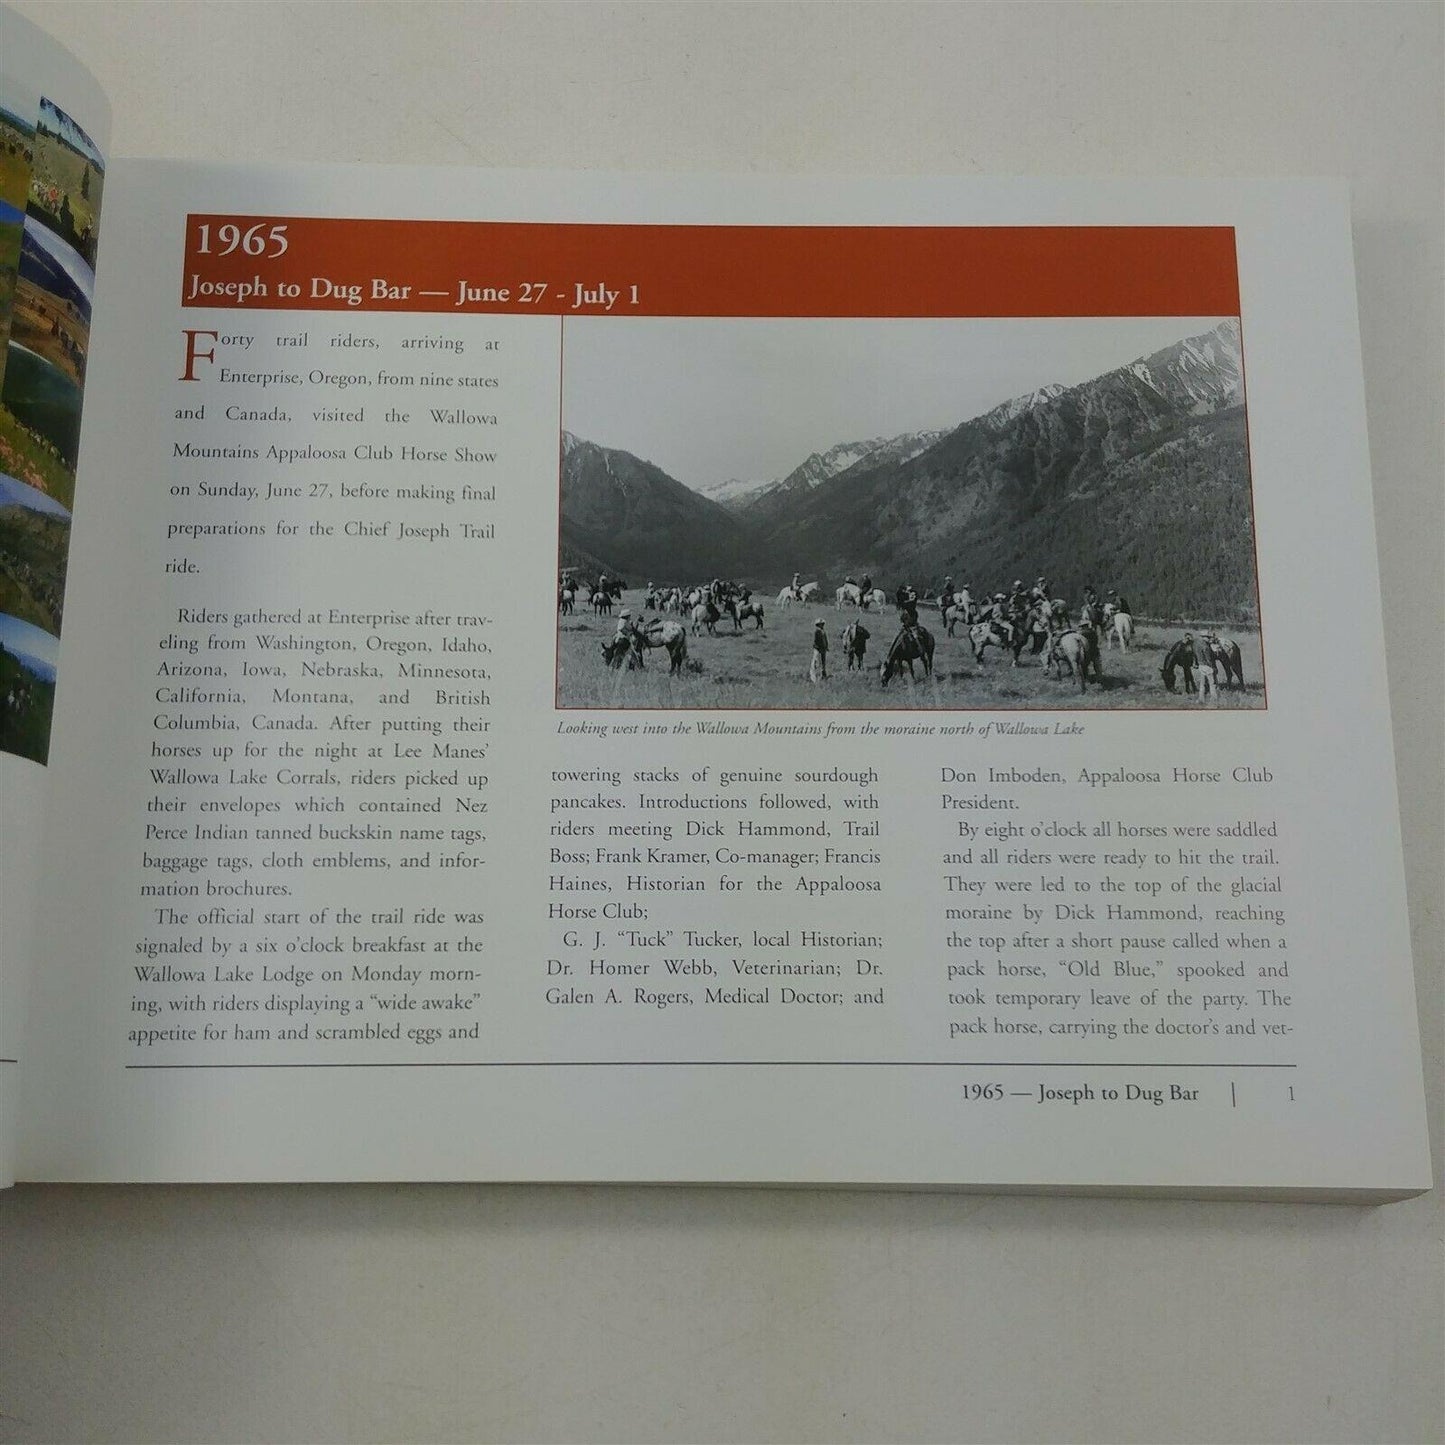 Riding The Nez Perce War Trail Twice 1965-1990 George B. Hatley Book Signed